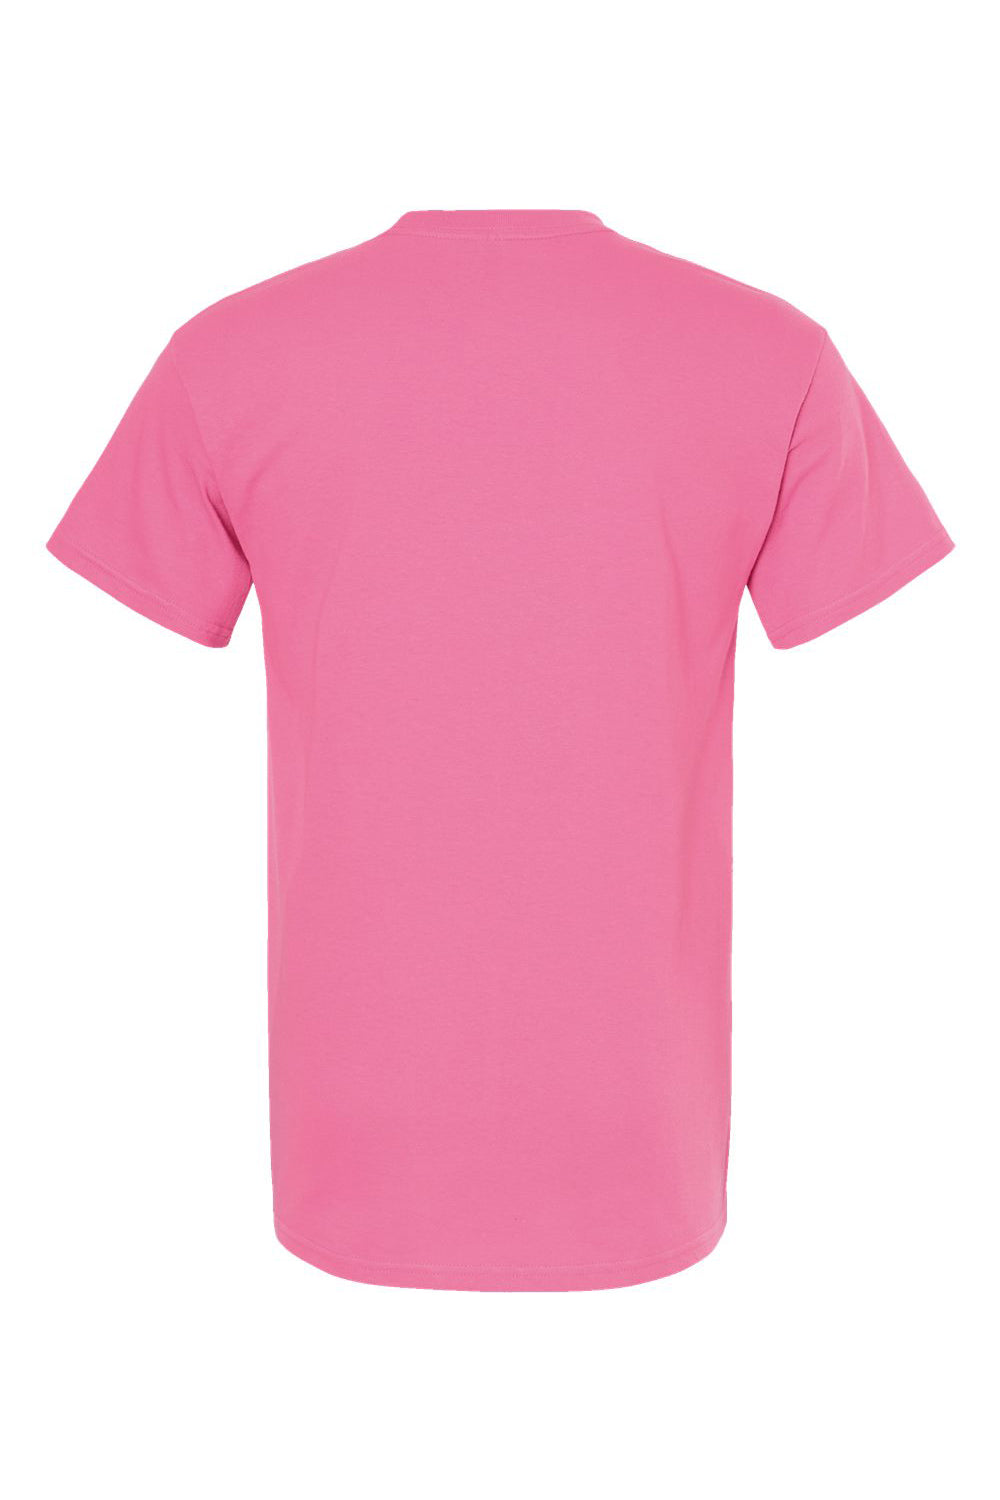 M&O 4800 Mens Gold Soft Touch Short Sleeve Crewneck T-Shirt Azalea Pink Flat Back